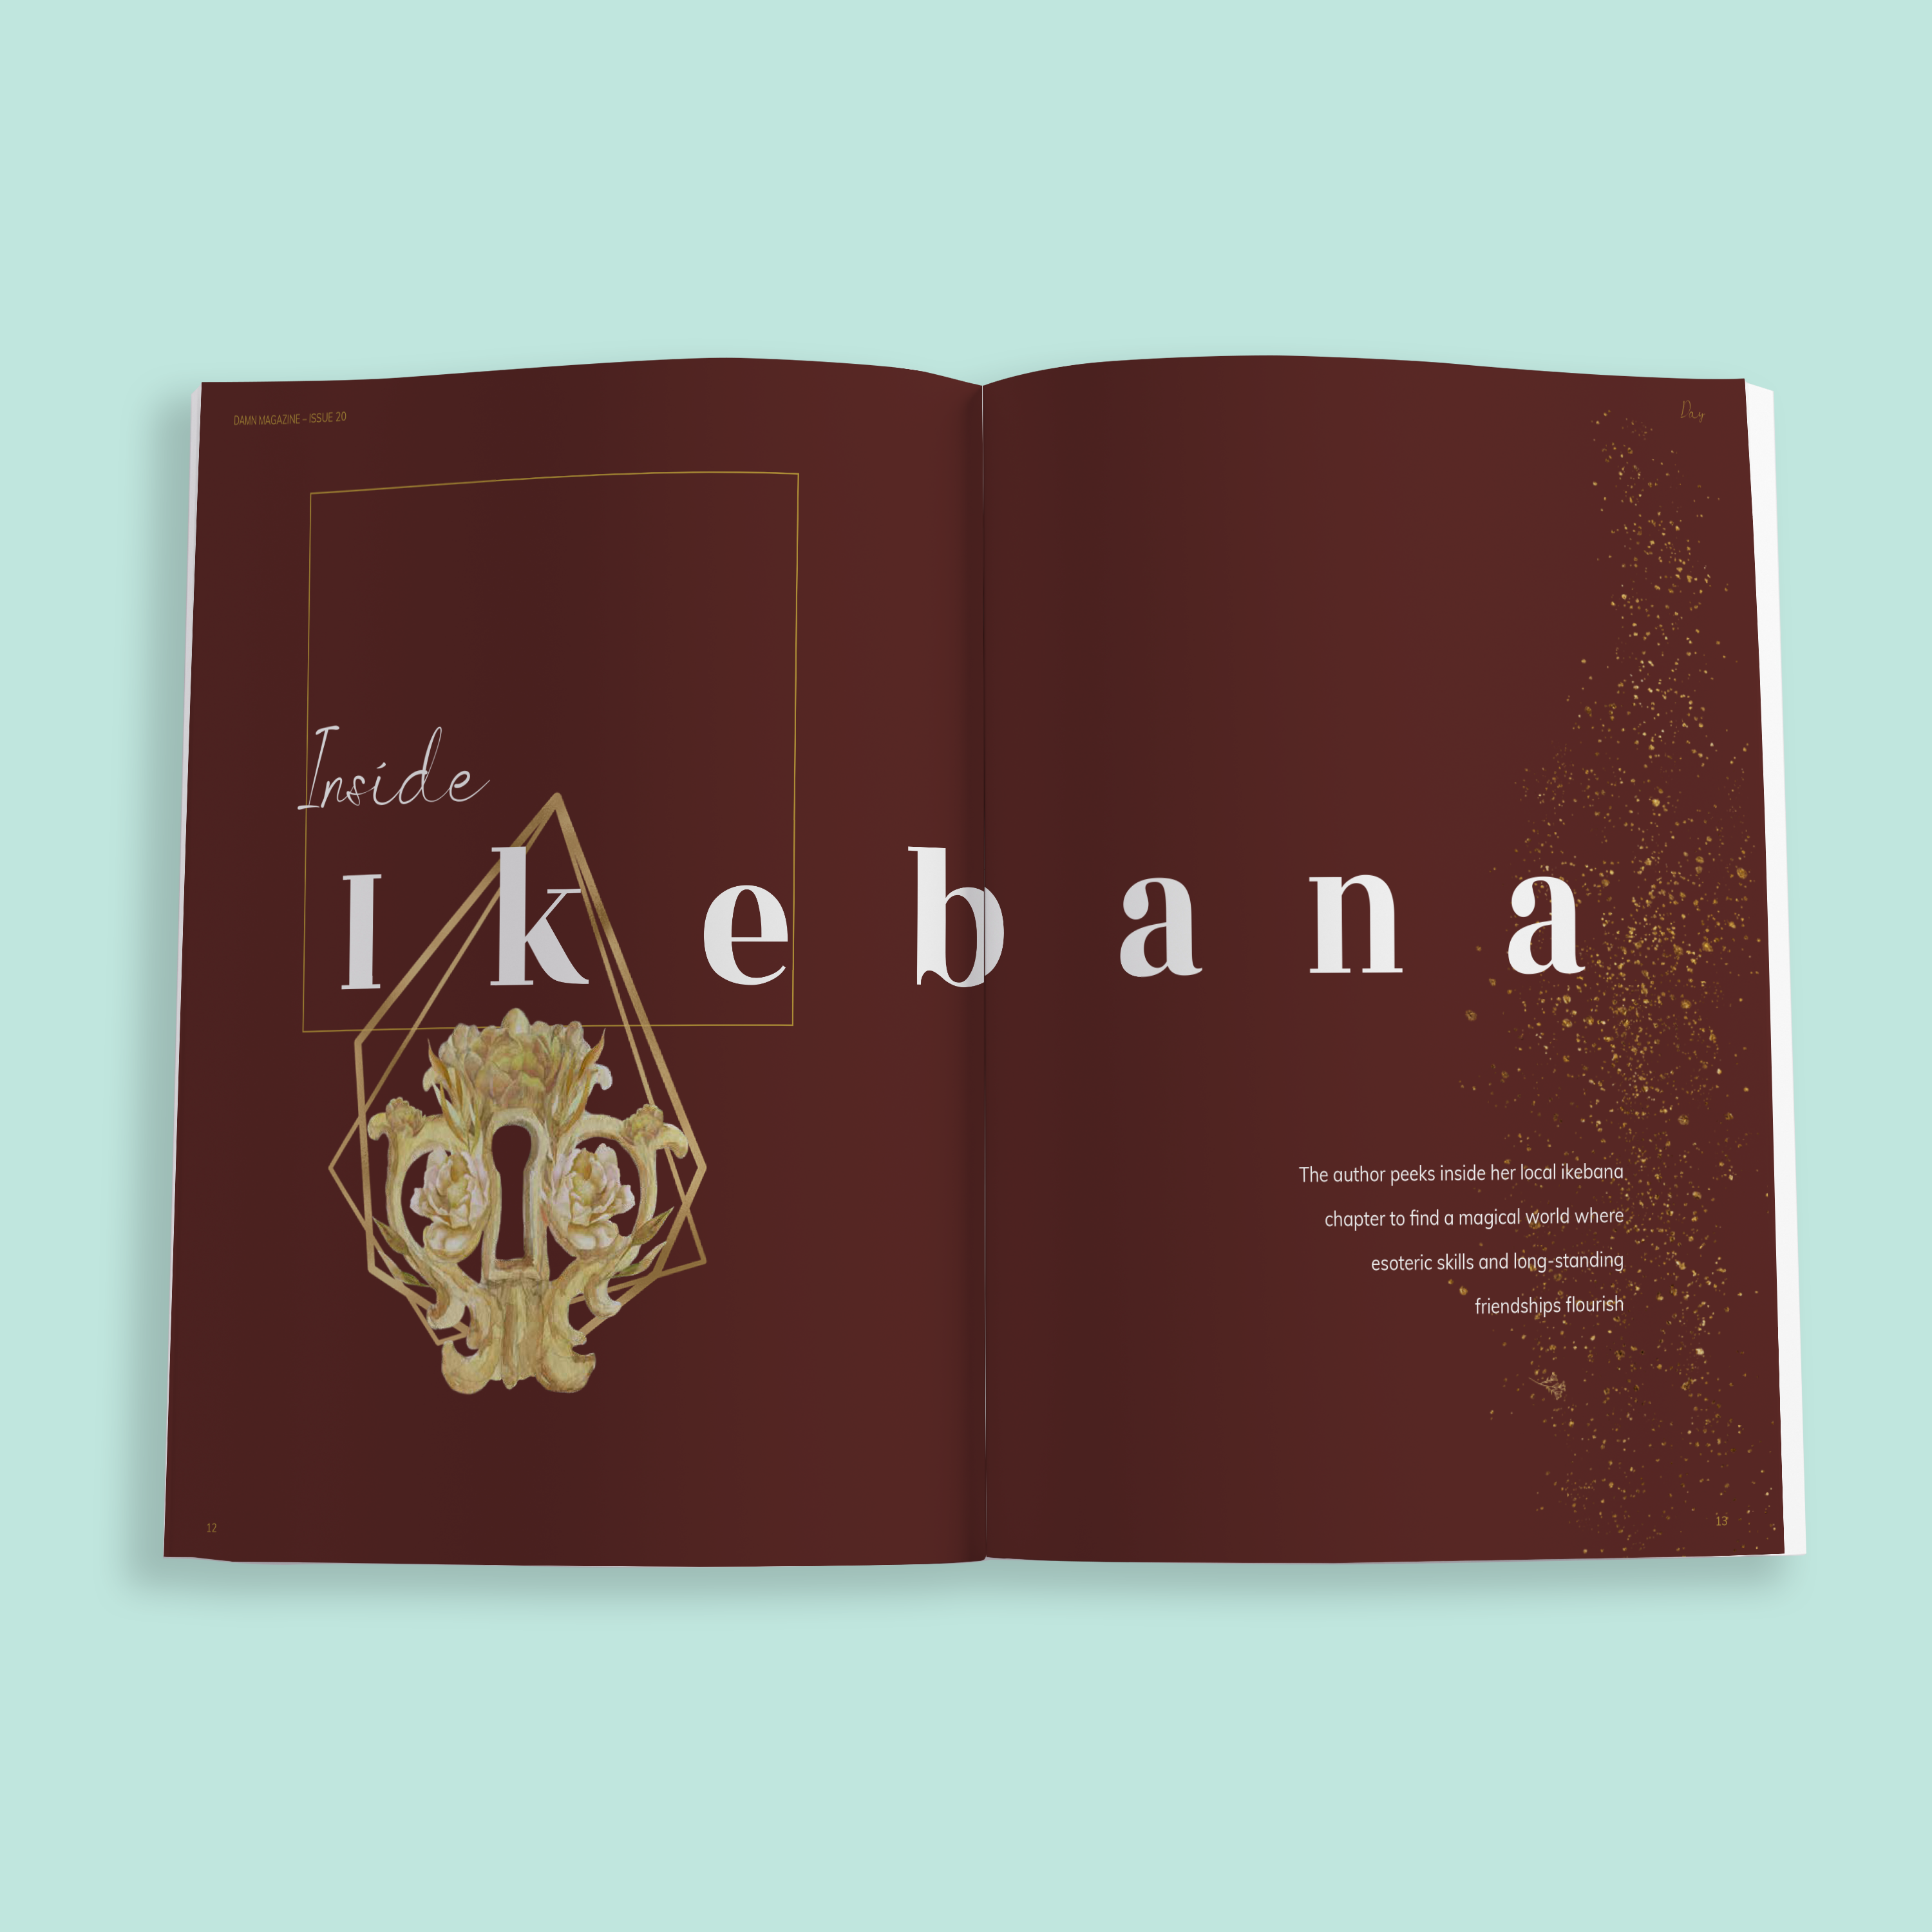 Ikebana magazine article